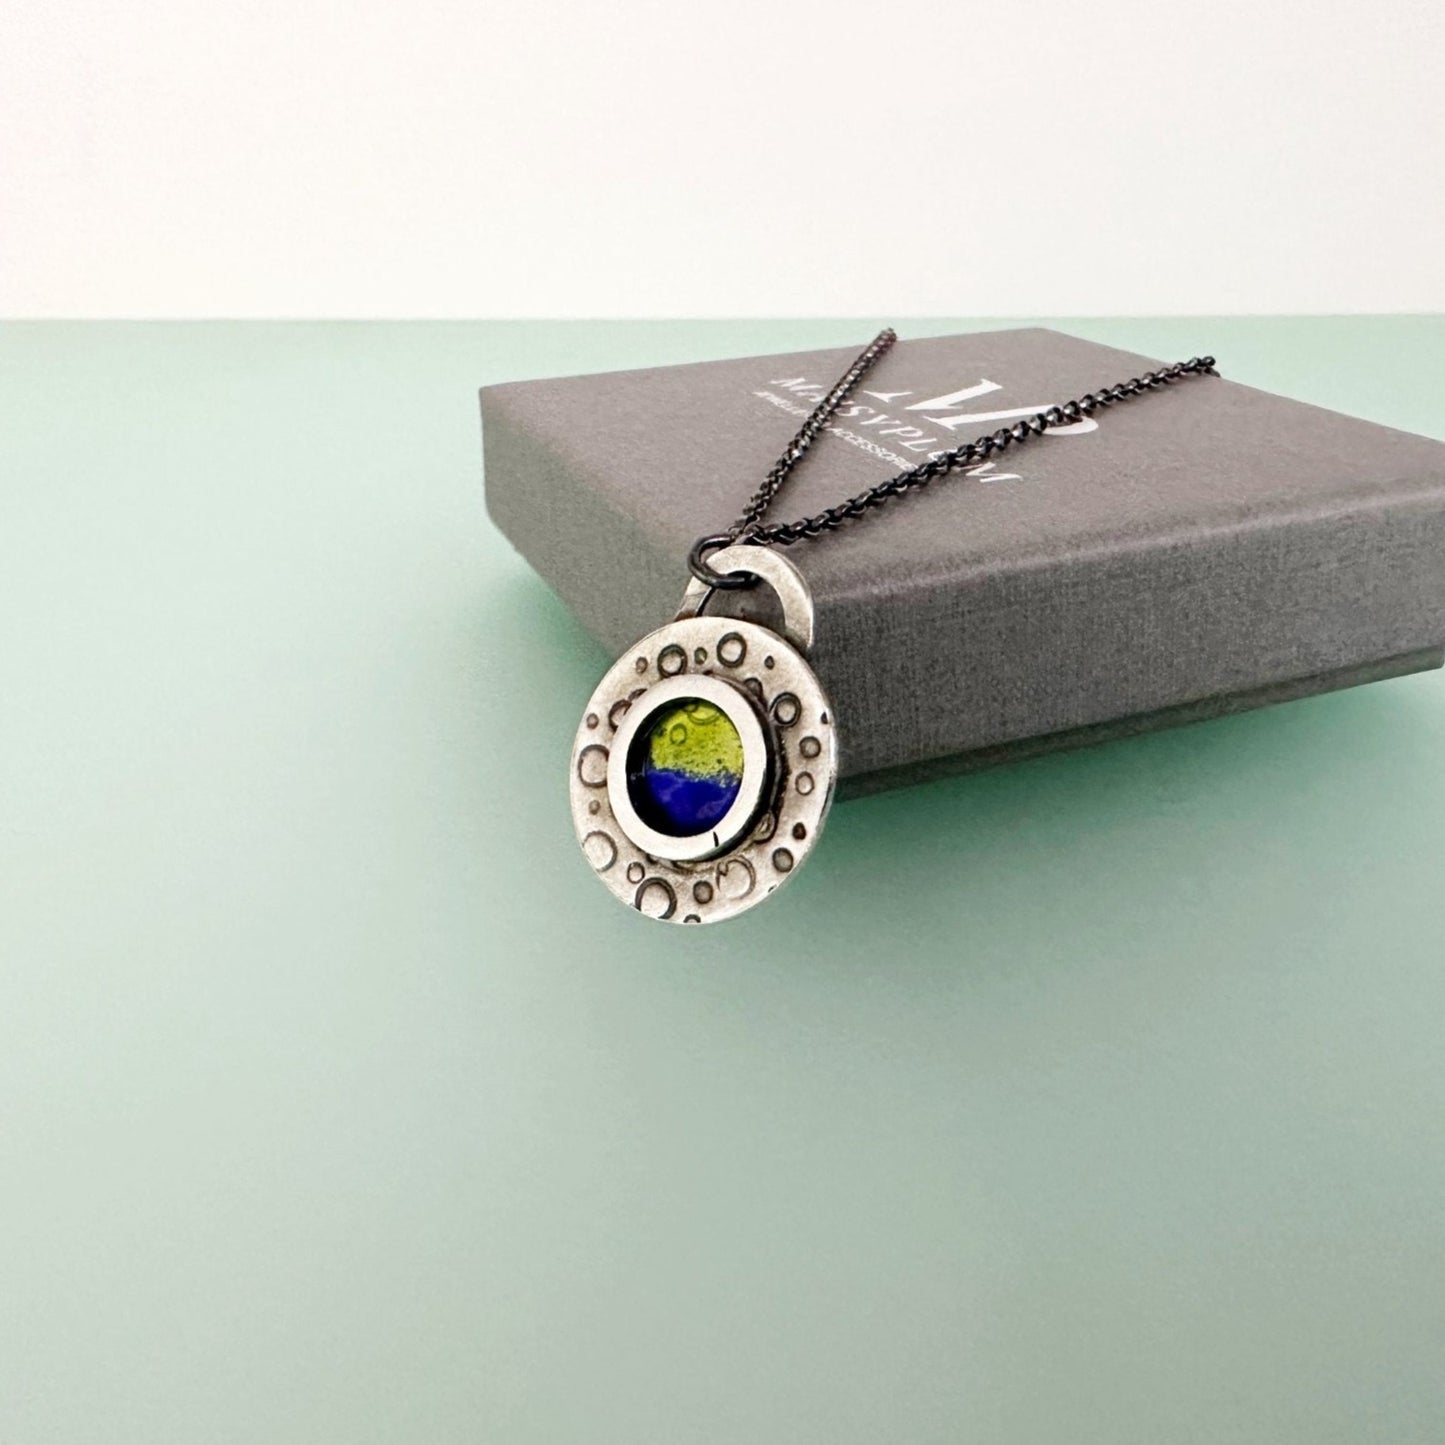 Oxidised handmade circle pendant with belcher chain - MaisyPlum